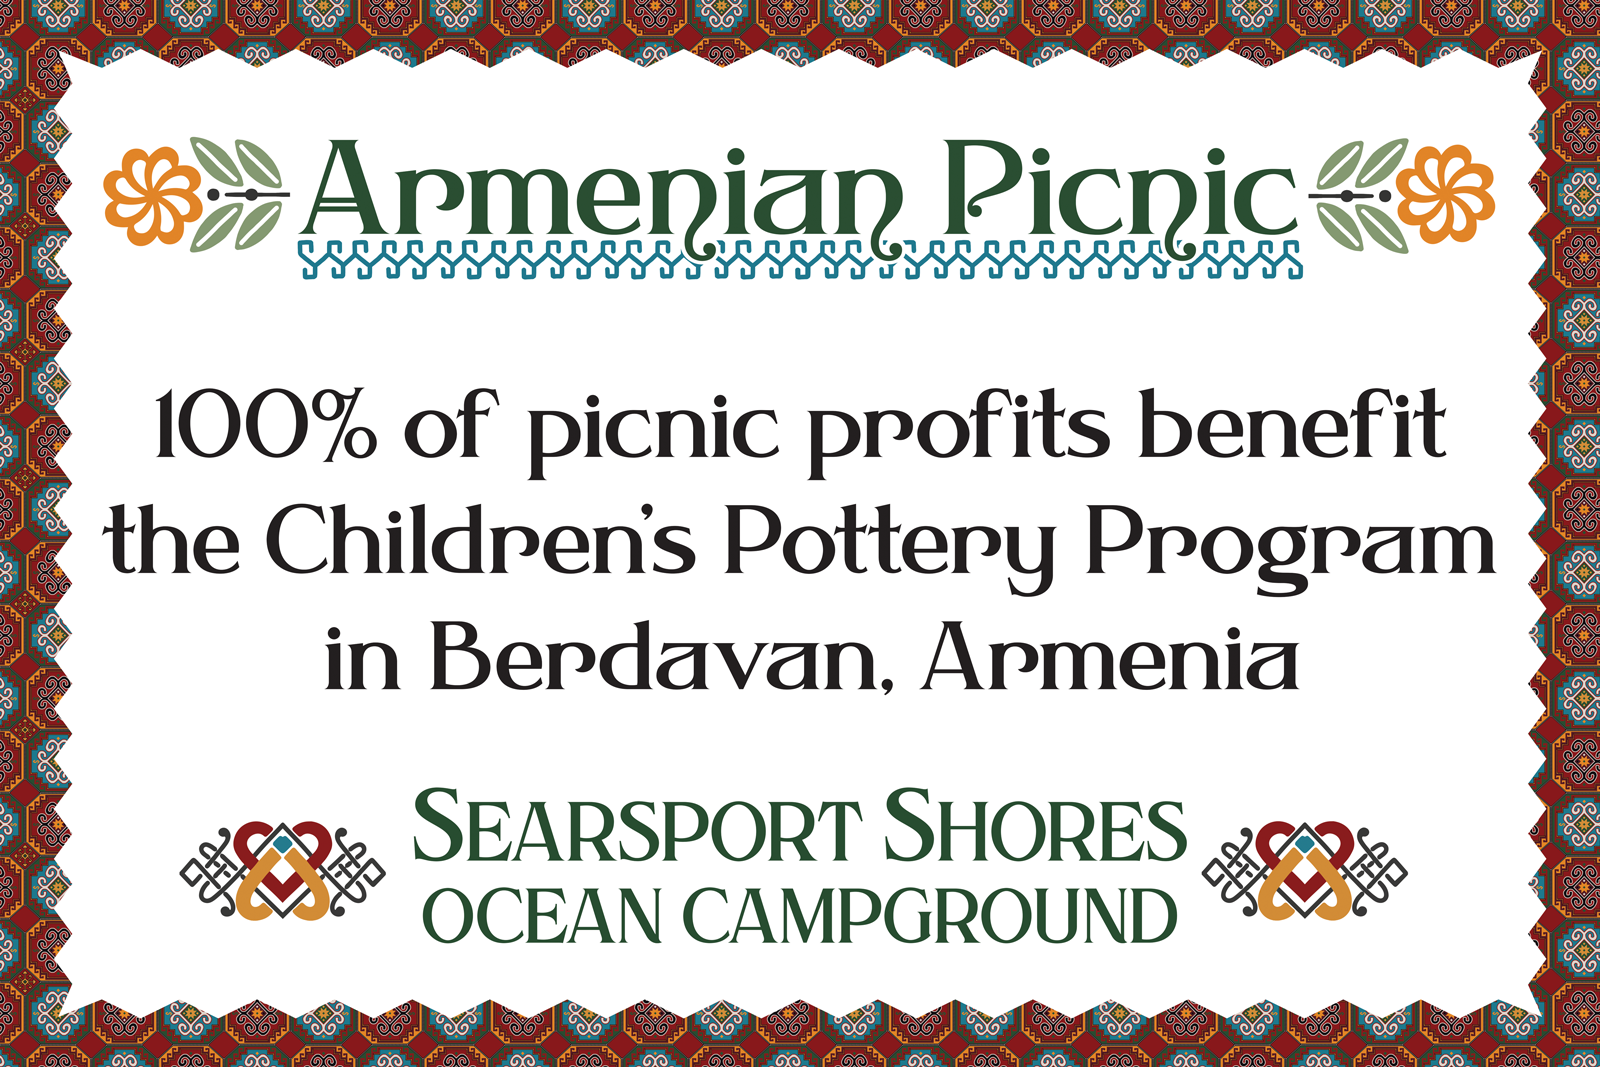 100% for the picnic profits will benefit the Children's Pottery Program of Berdavan